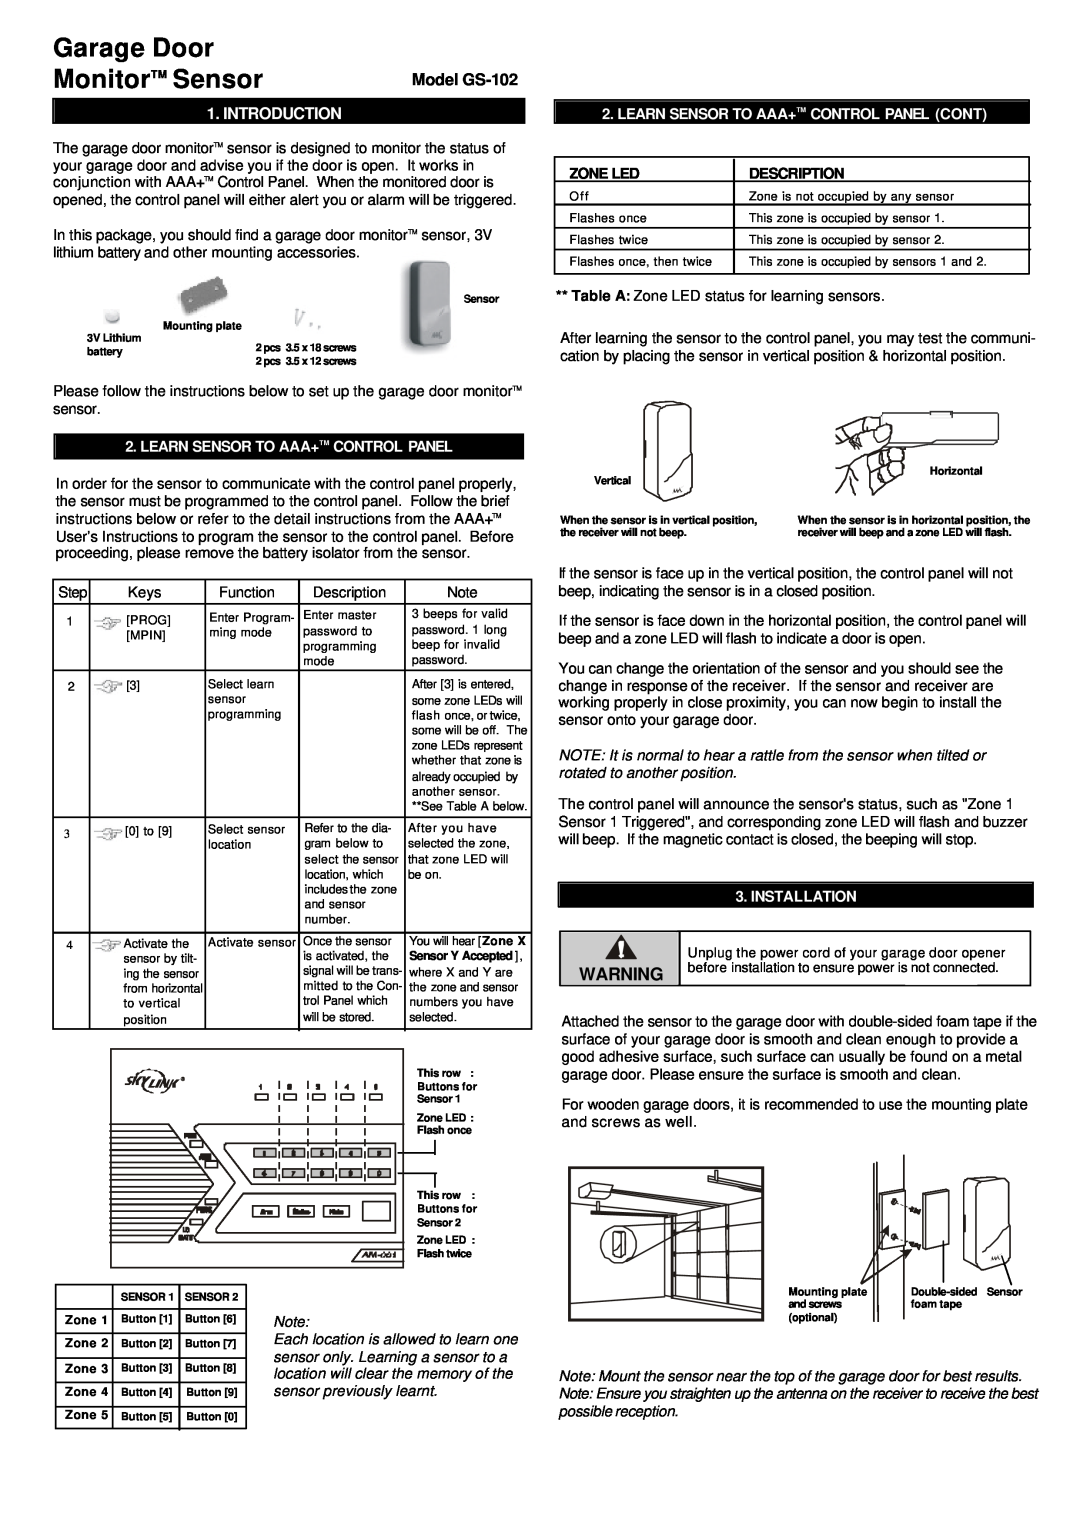 SkyLink GS-102 manual Learn Sensor To Aaa+Tm Control Panel Cont, Zone Led, Description, Installation, Garage Door 